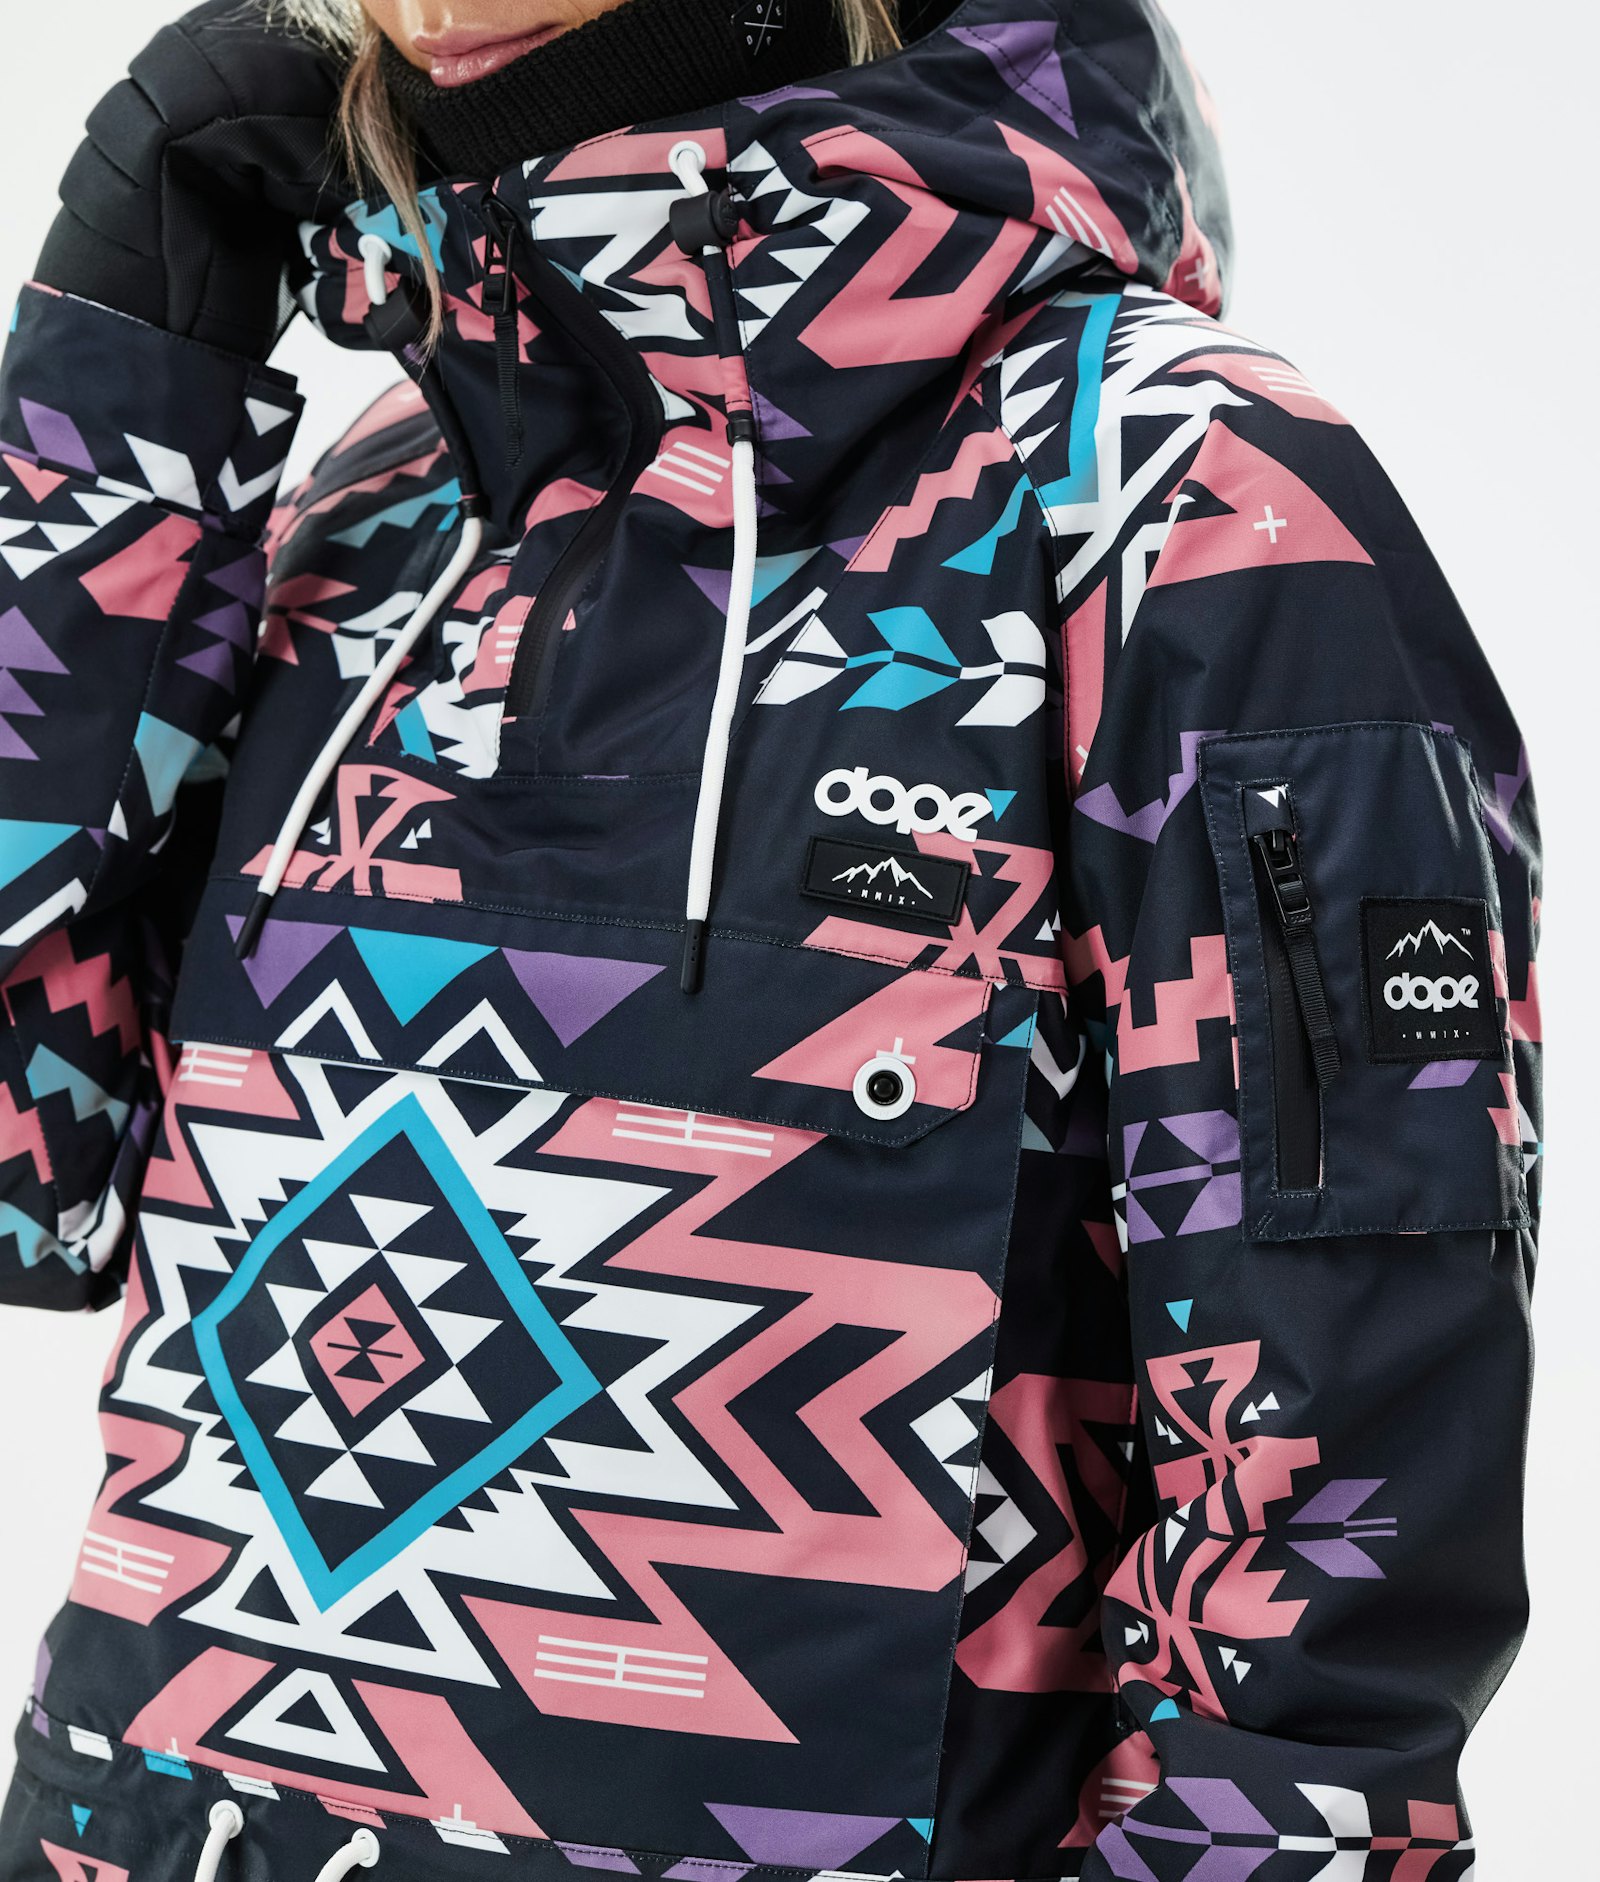 Annok W 2020 Snowboard Jacket Women Inka Pink